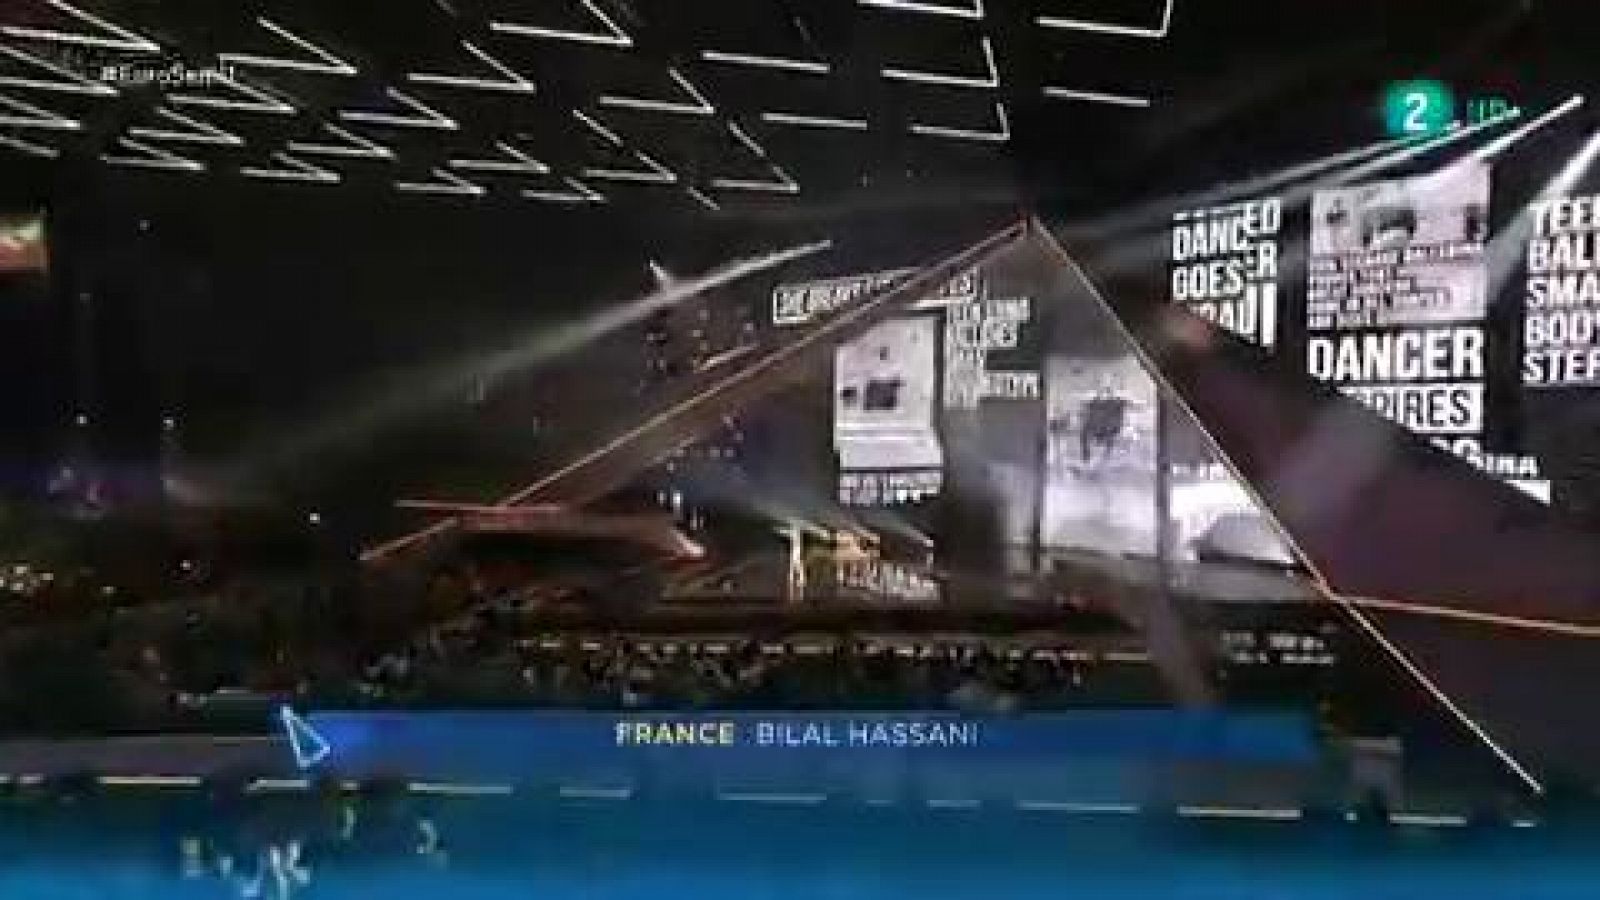 Eurovisión 2019 - Minuto de Francia: Bilal Hassani canta "Roi" en la primera semifinal